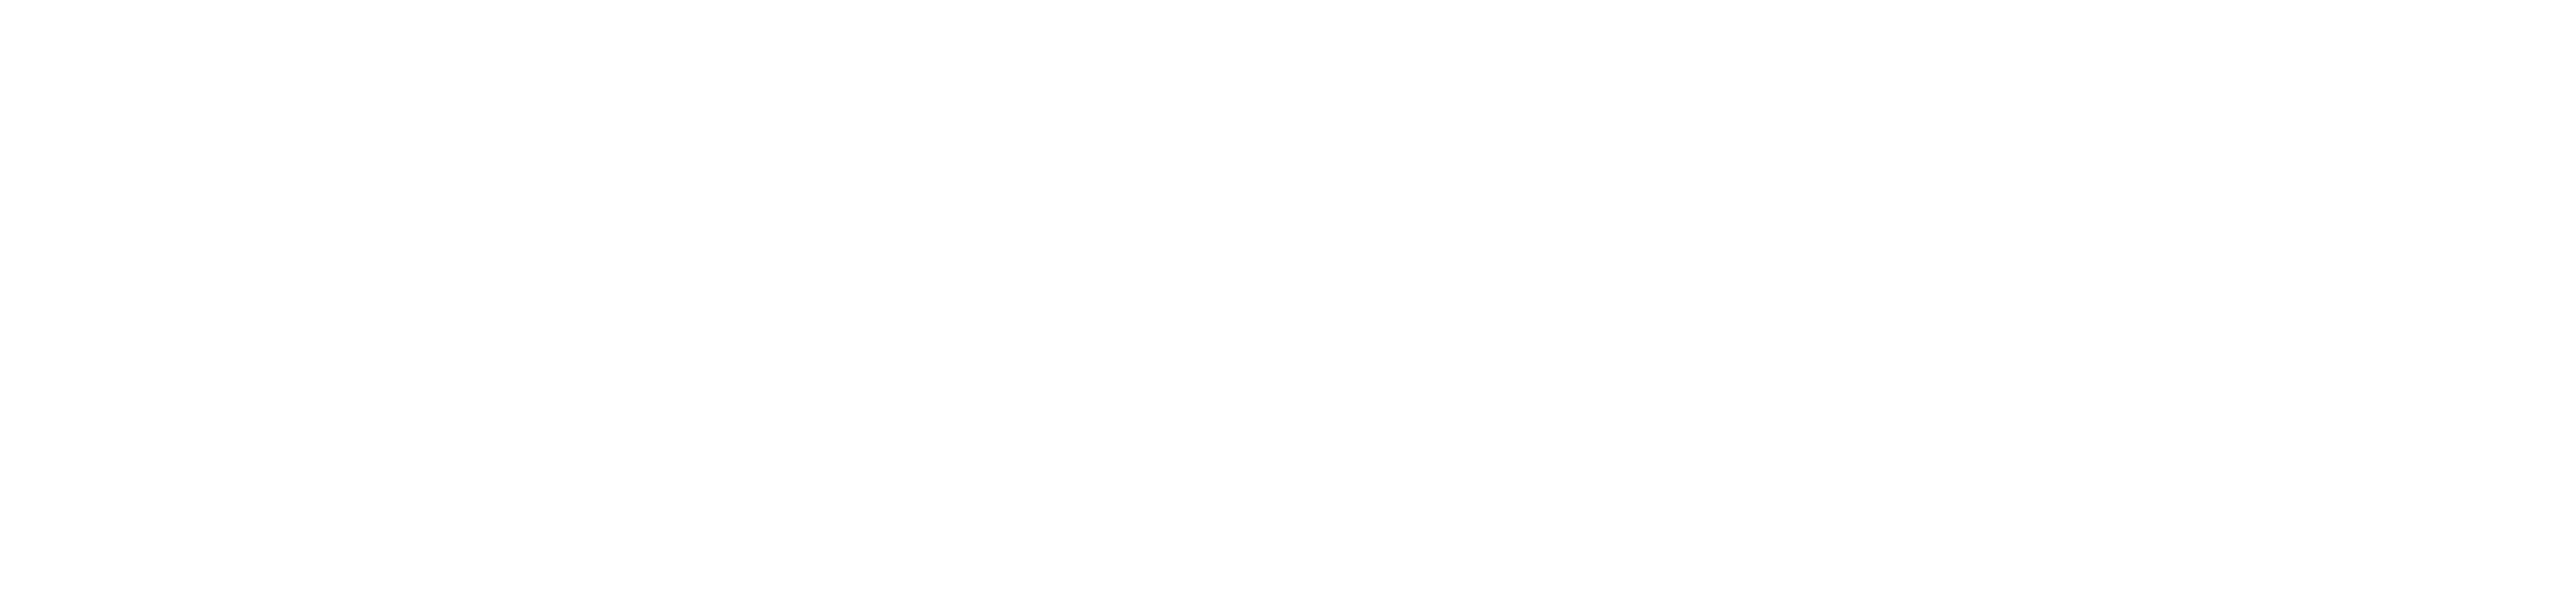 Tropiclean logo